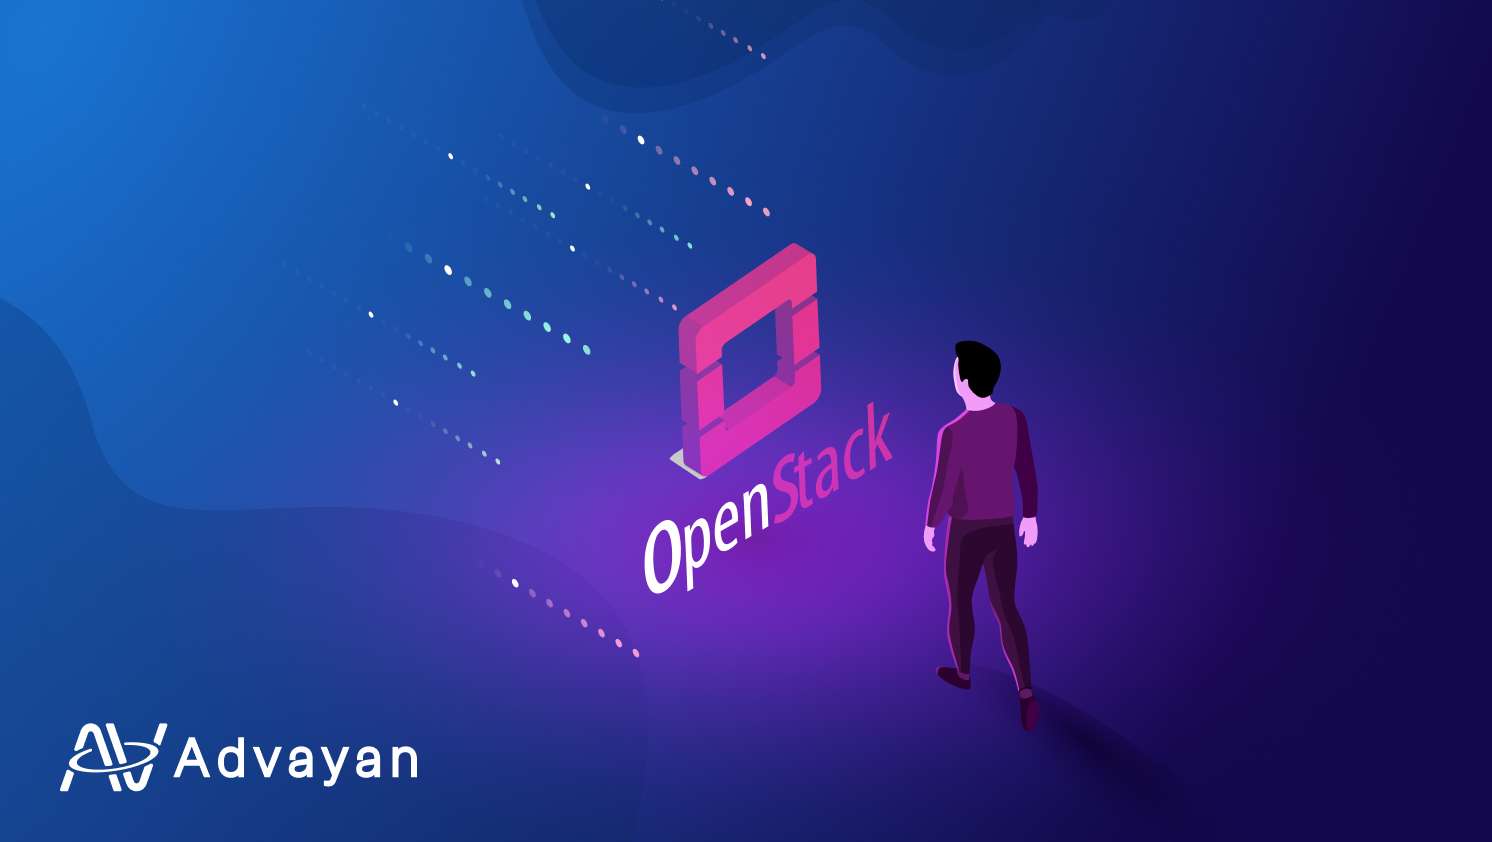 Why Choose Advayan OpenStack